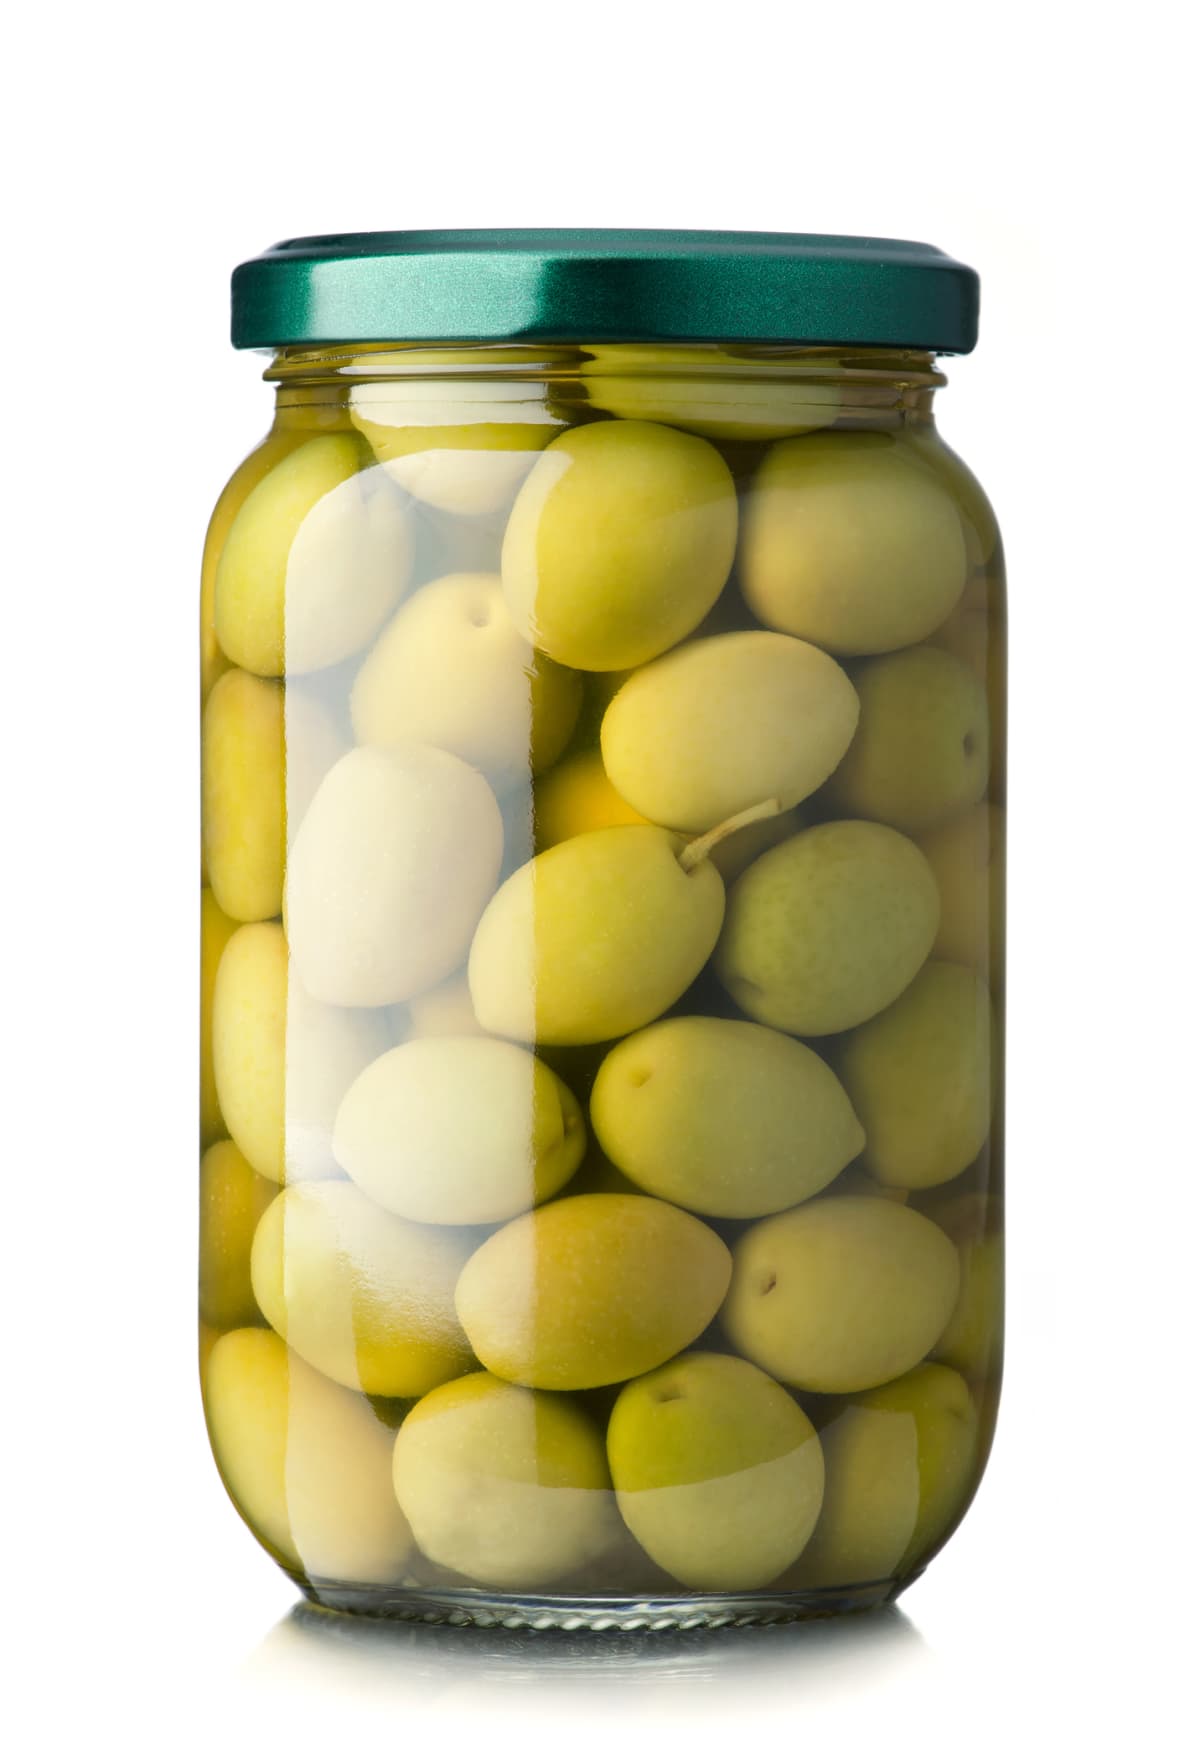 A jar of green olives